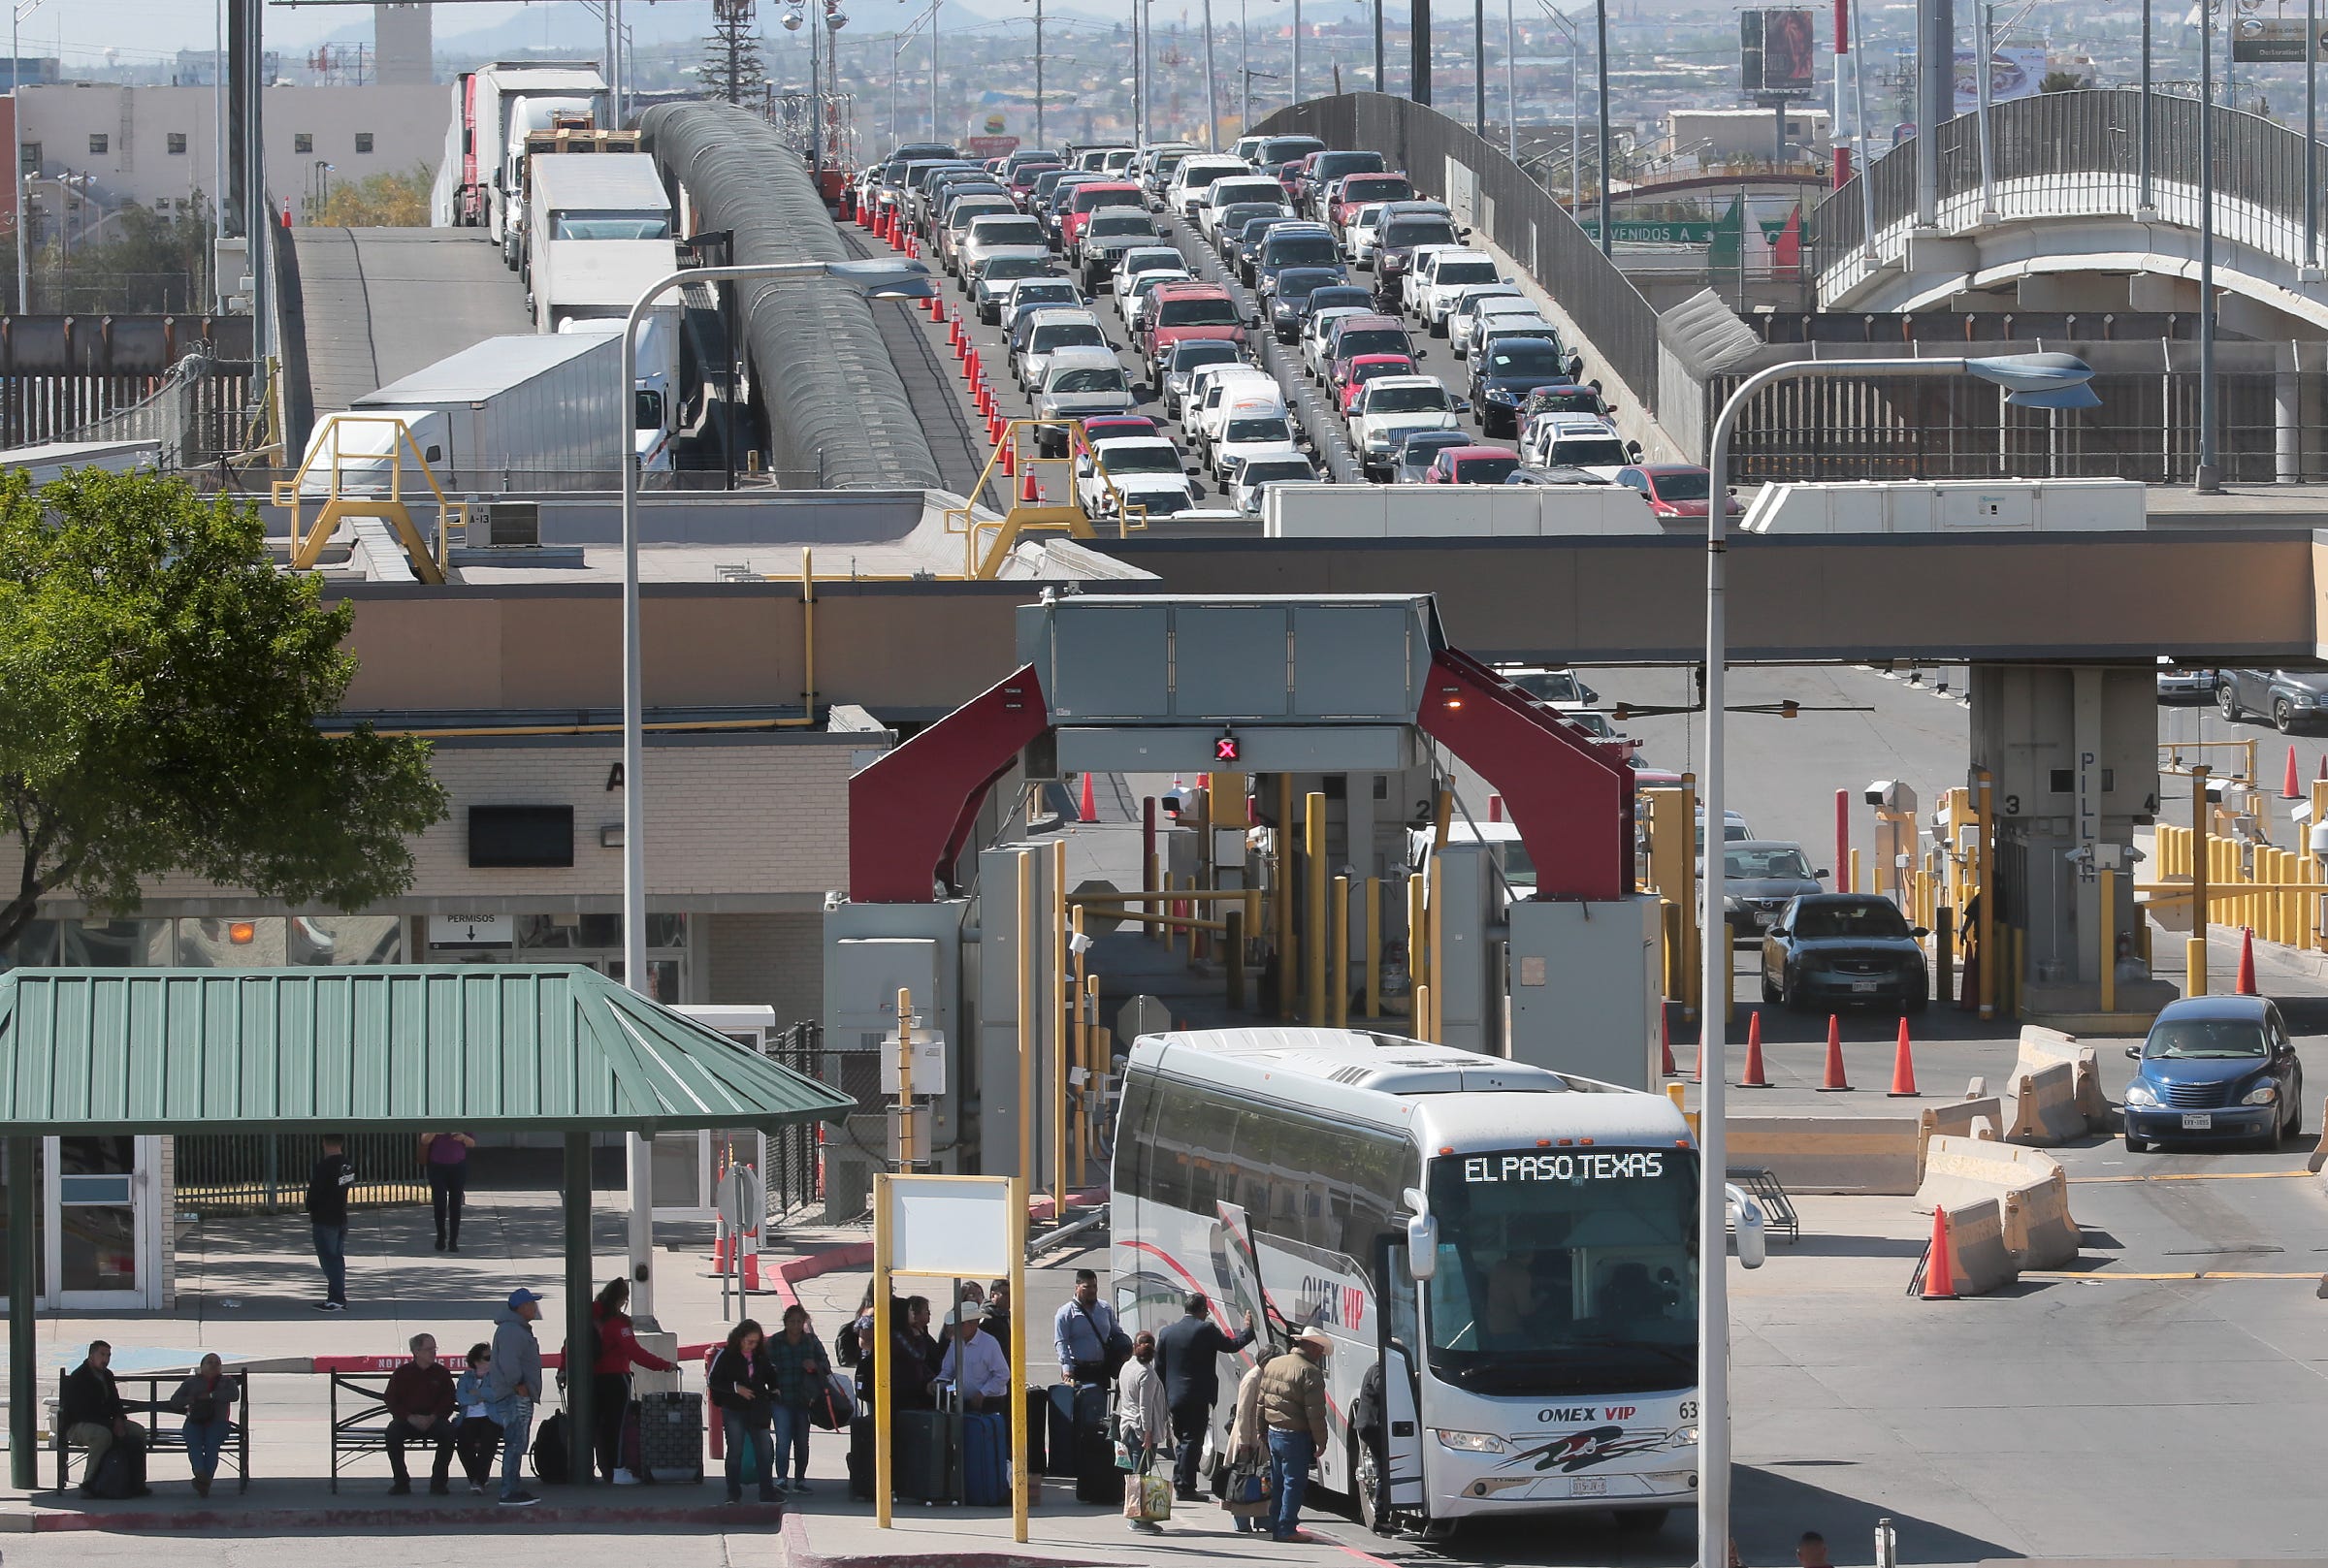 CBP to close lanes at El Paso bridge as officers aid migrant processing